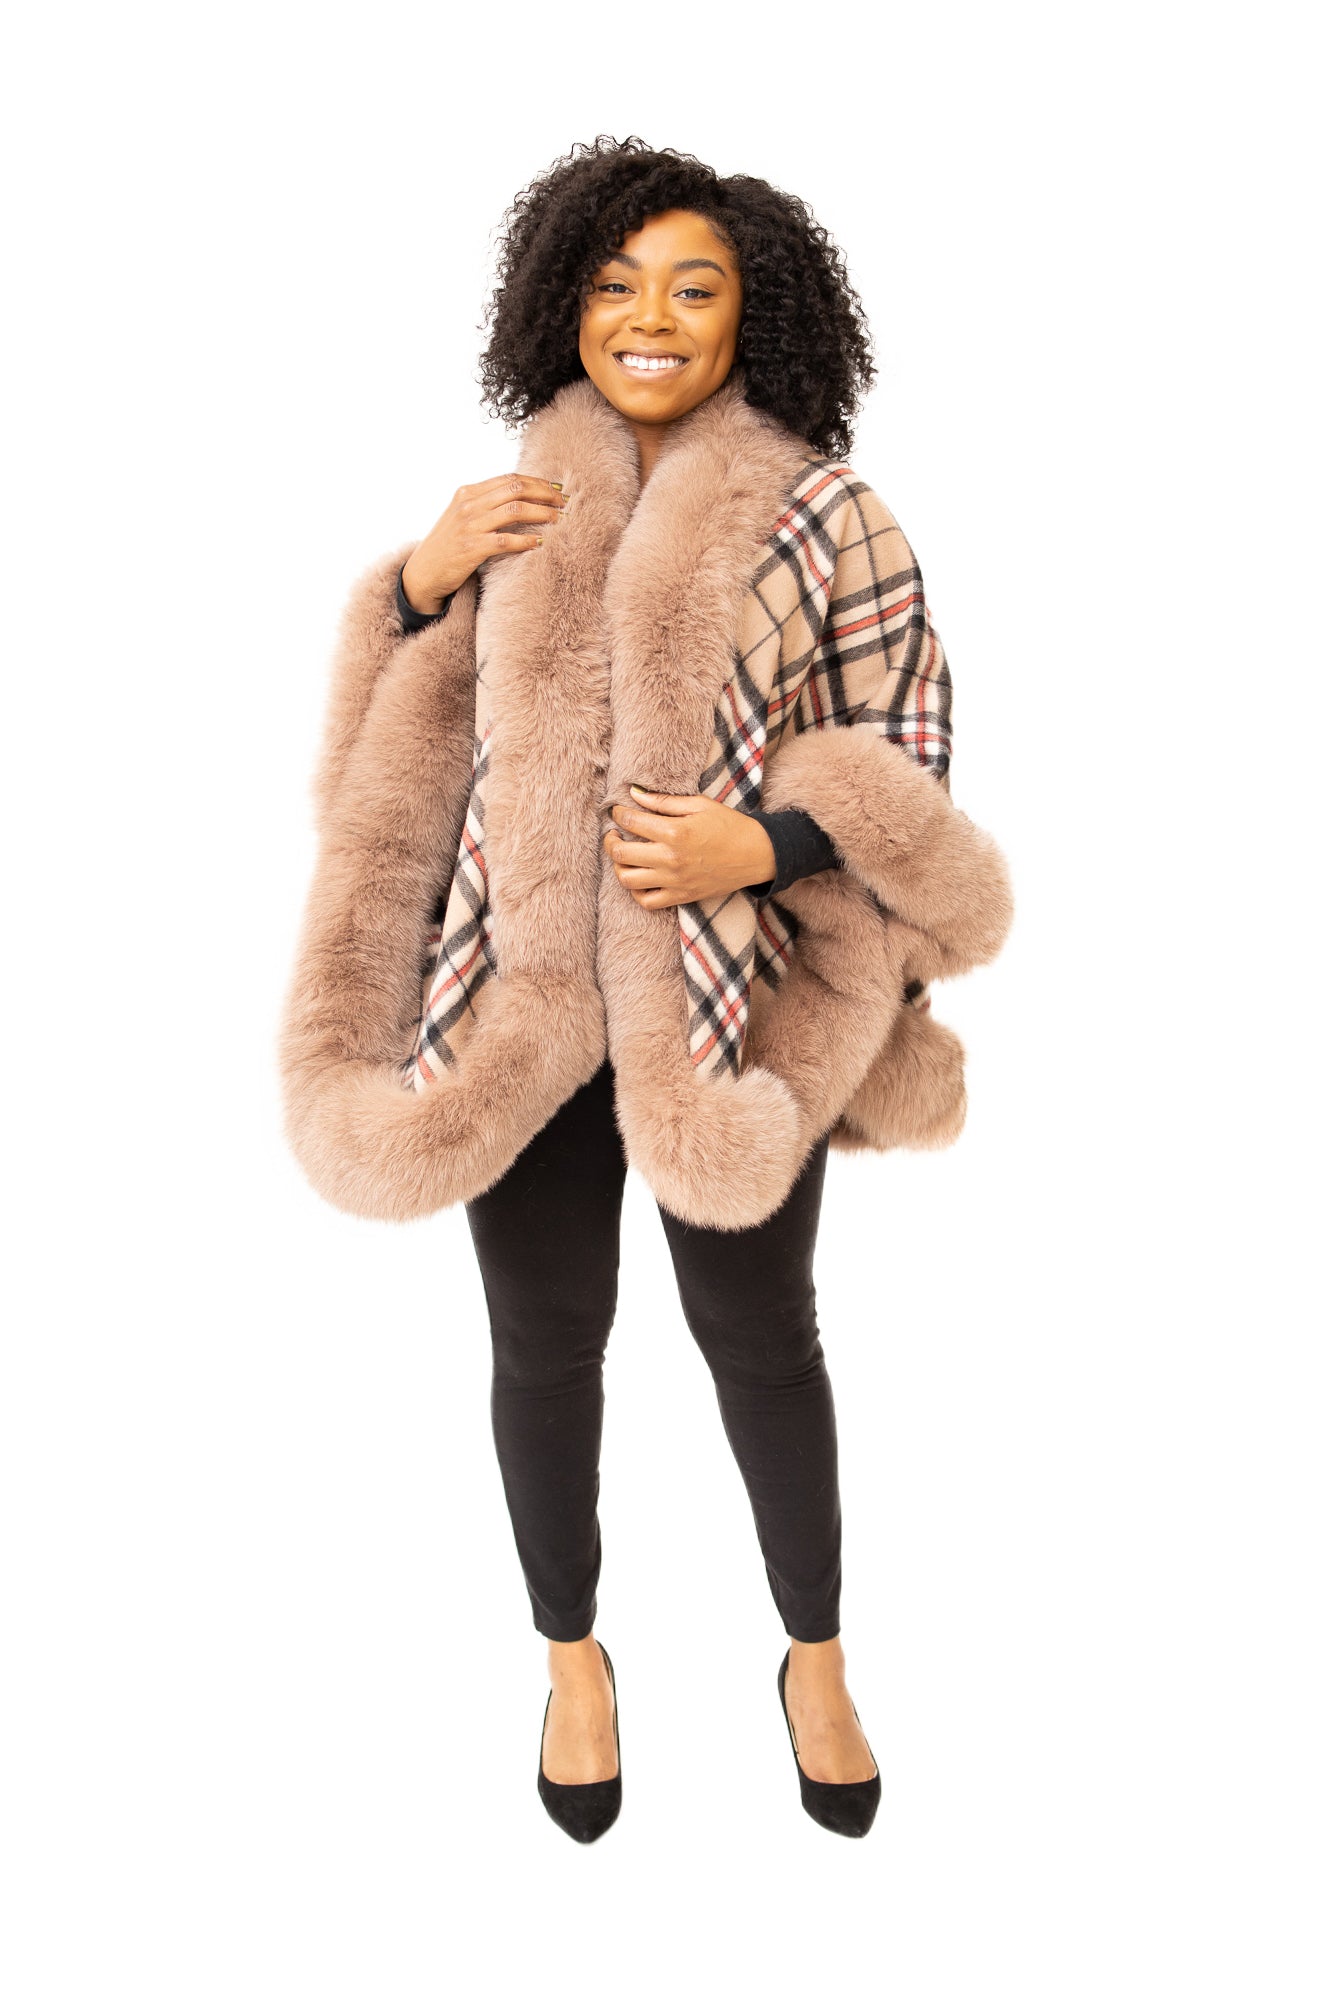 Women's Rabbit Fur Coats, Vests, and More